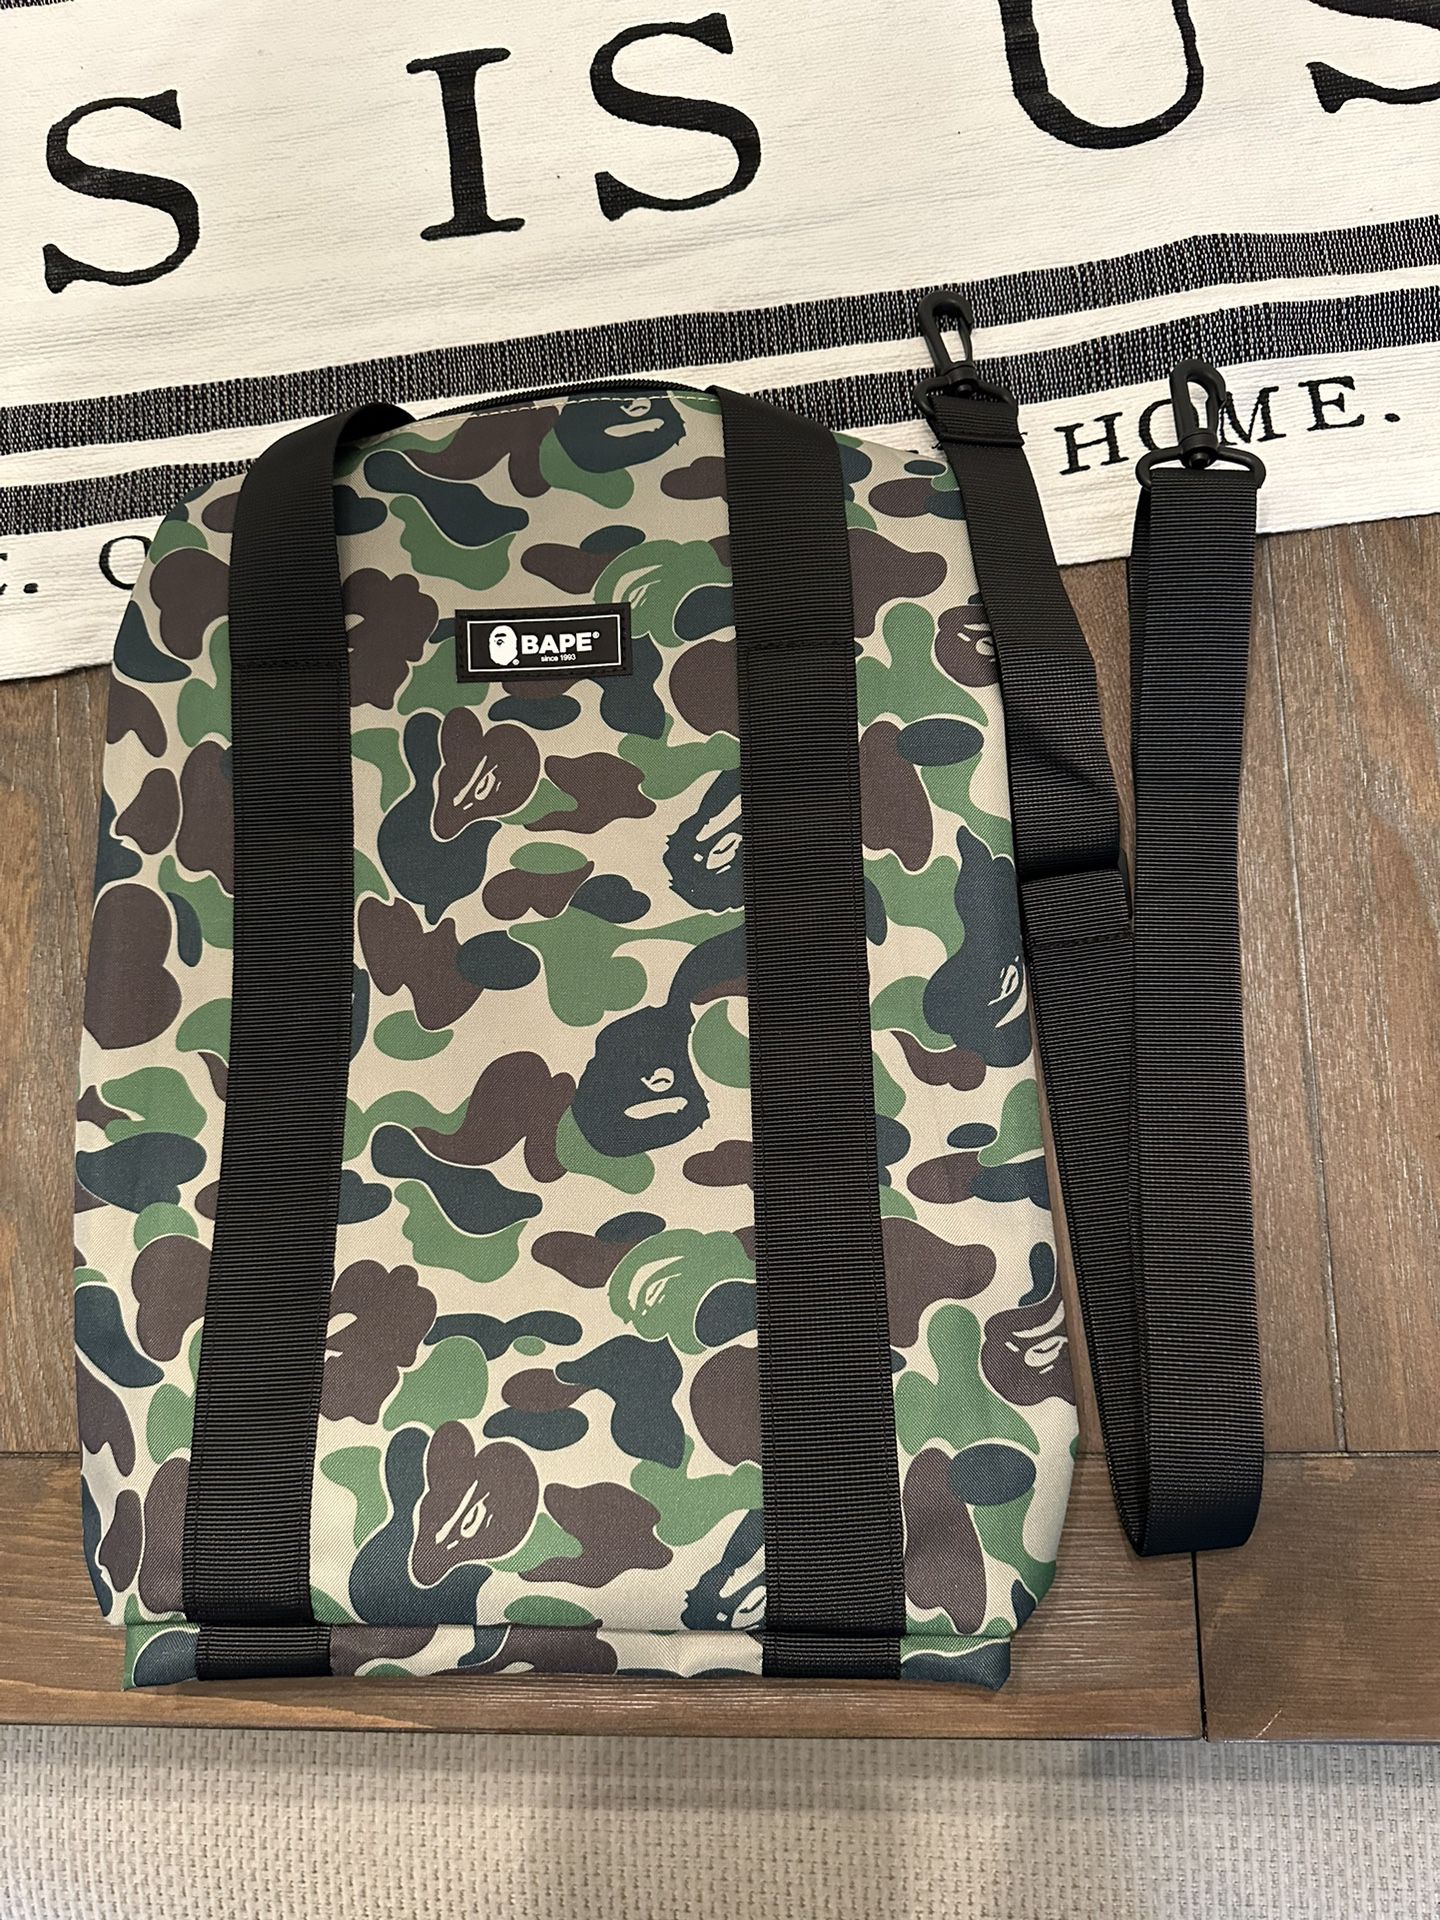 Drop Dayz - BAPE Duffle Bag - Get yourself a nice BAPE Duffle bag! - Only  available at dropdayz